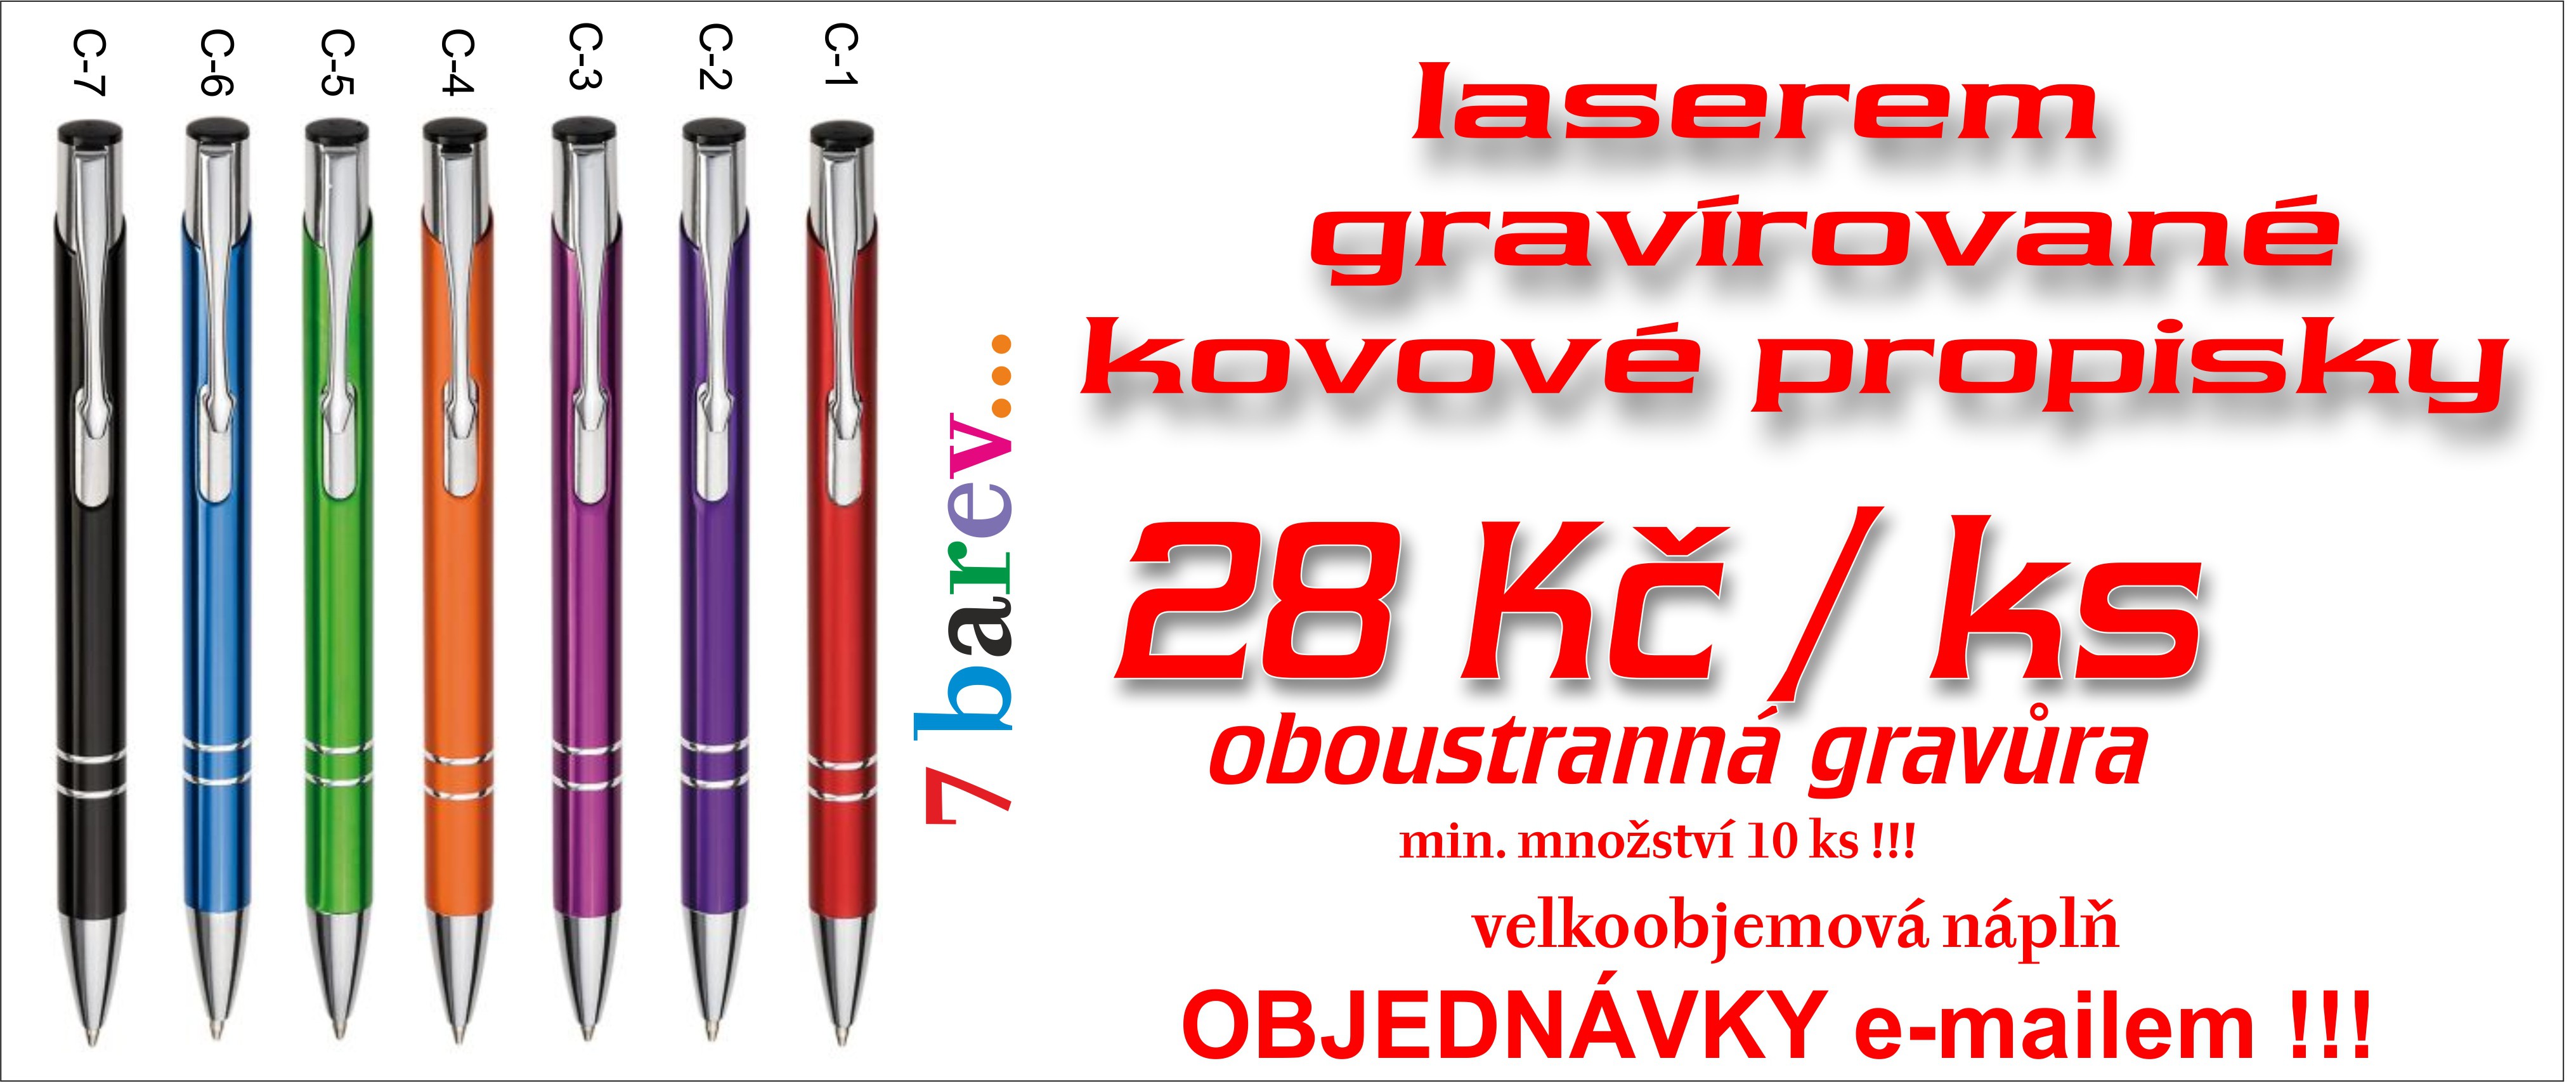 www-propisky-uvodni.jpg